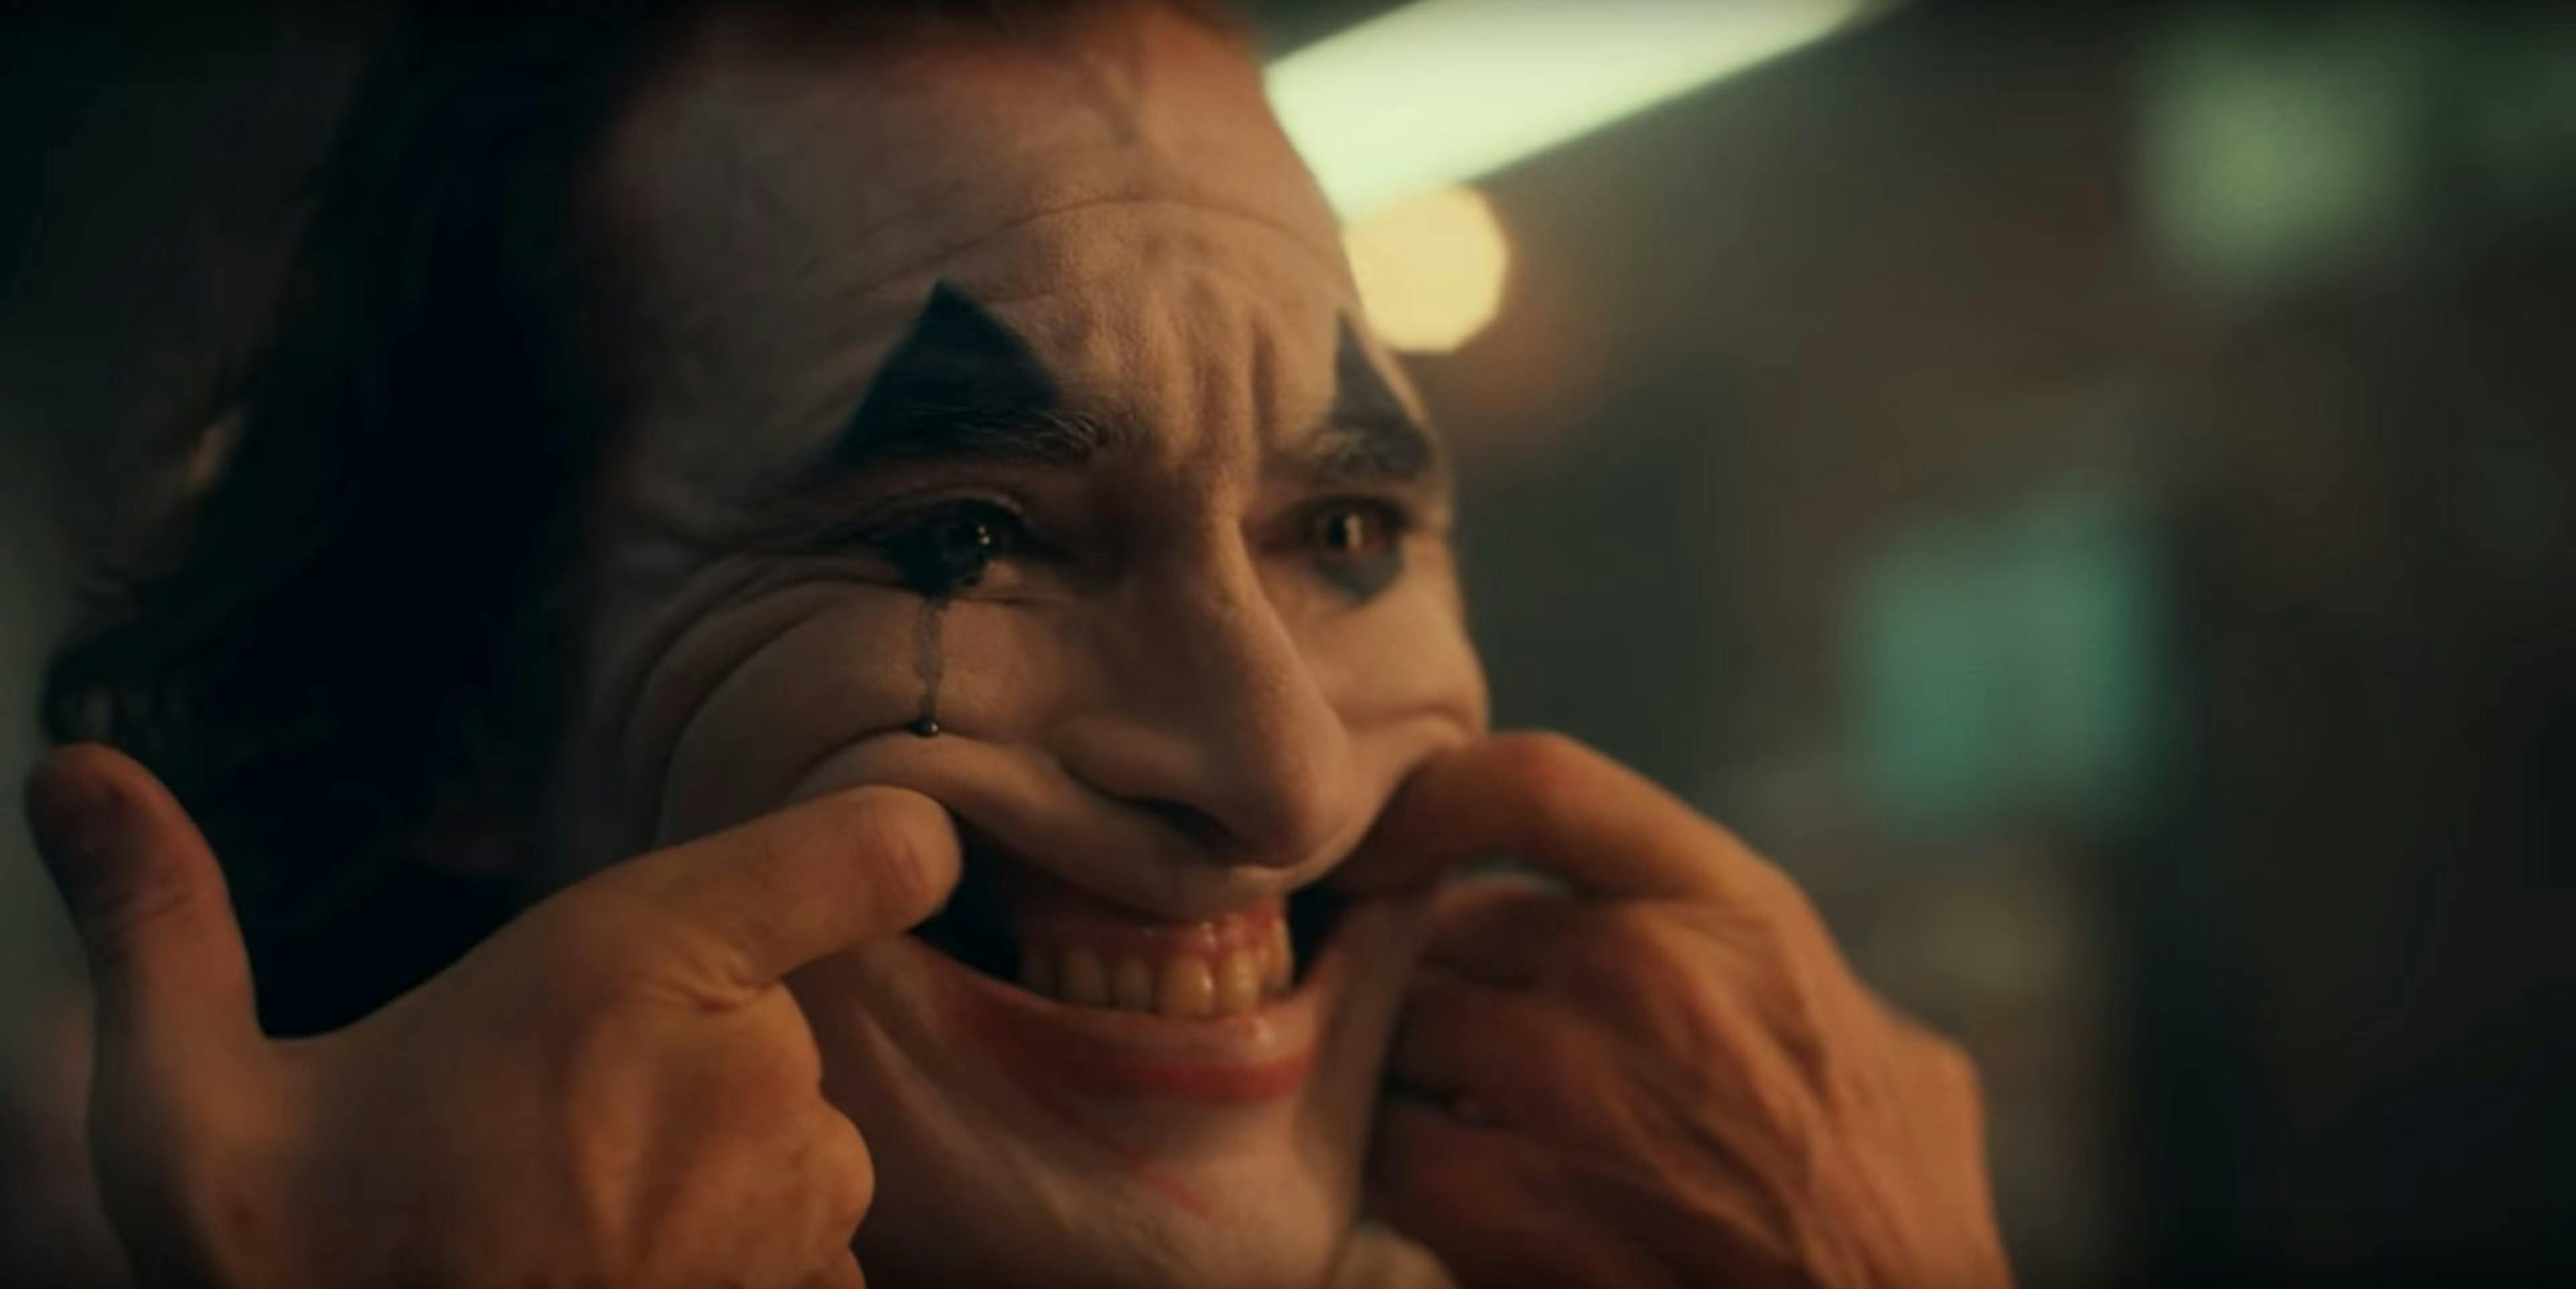 Watch The First Trailer For New Joker Movie Starring Joaquin Phoenix